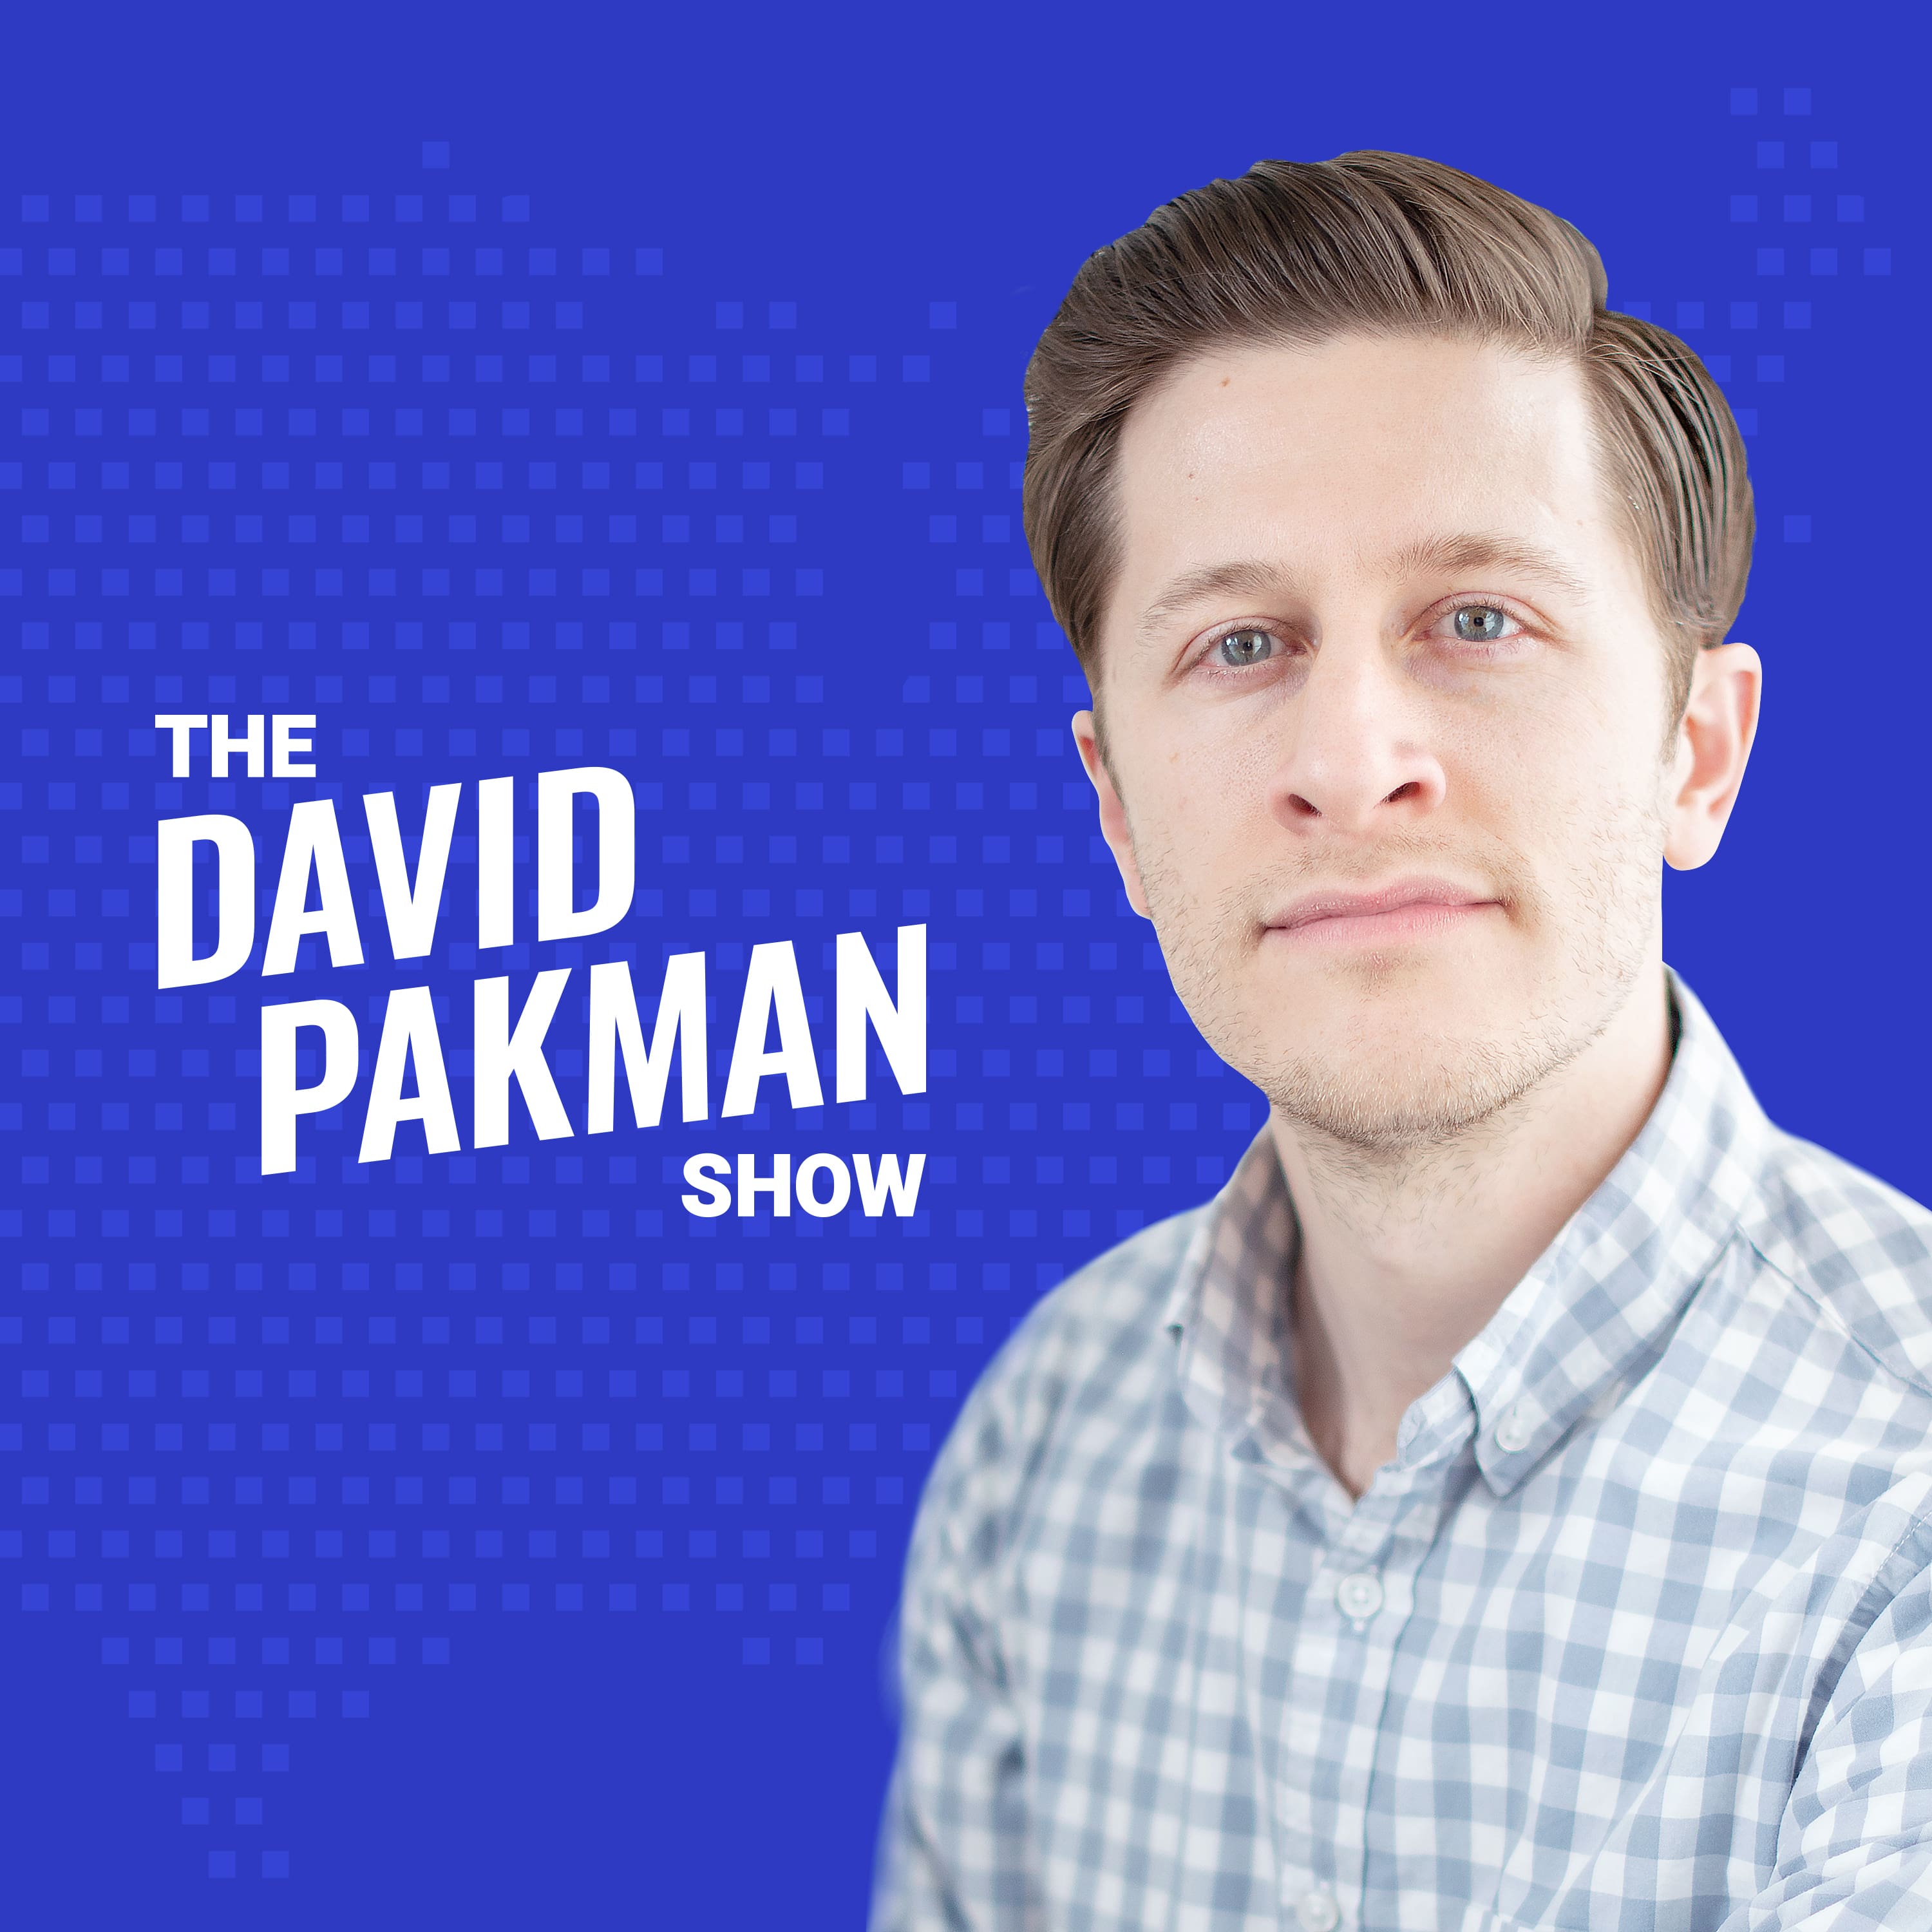 The David Pakman Show:David Pakman